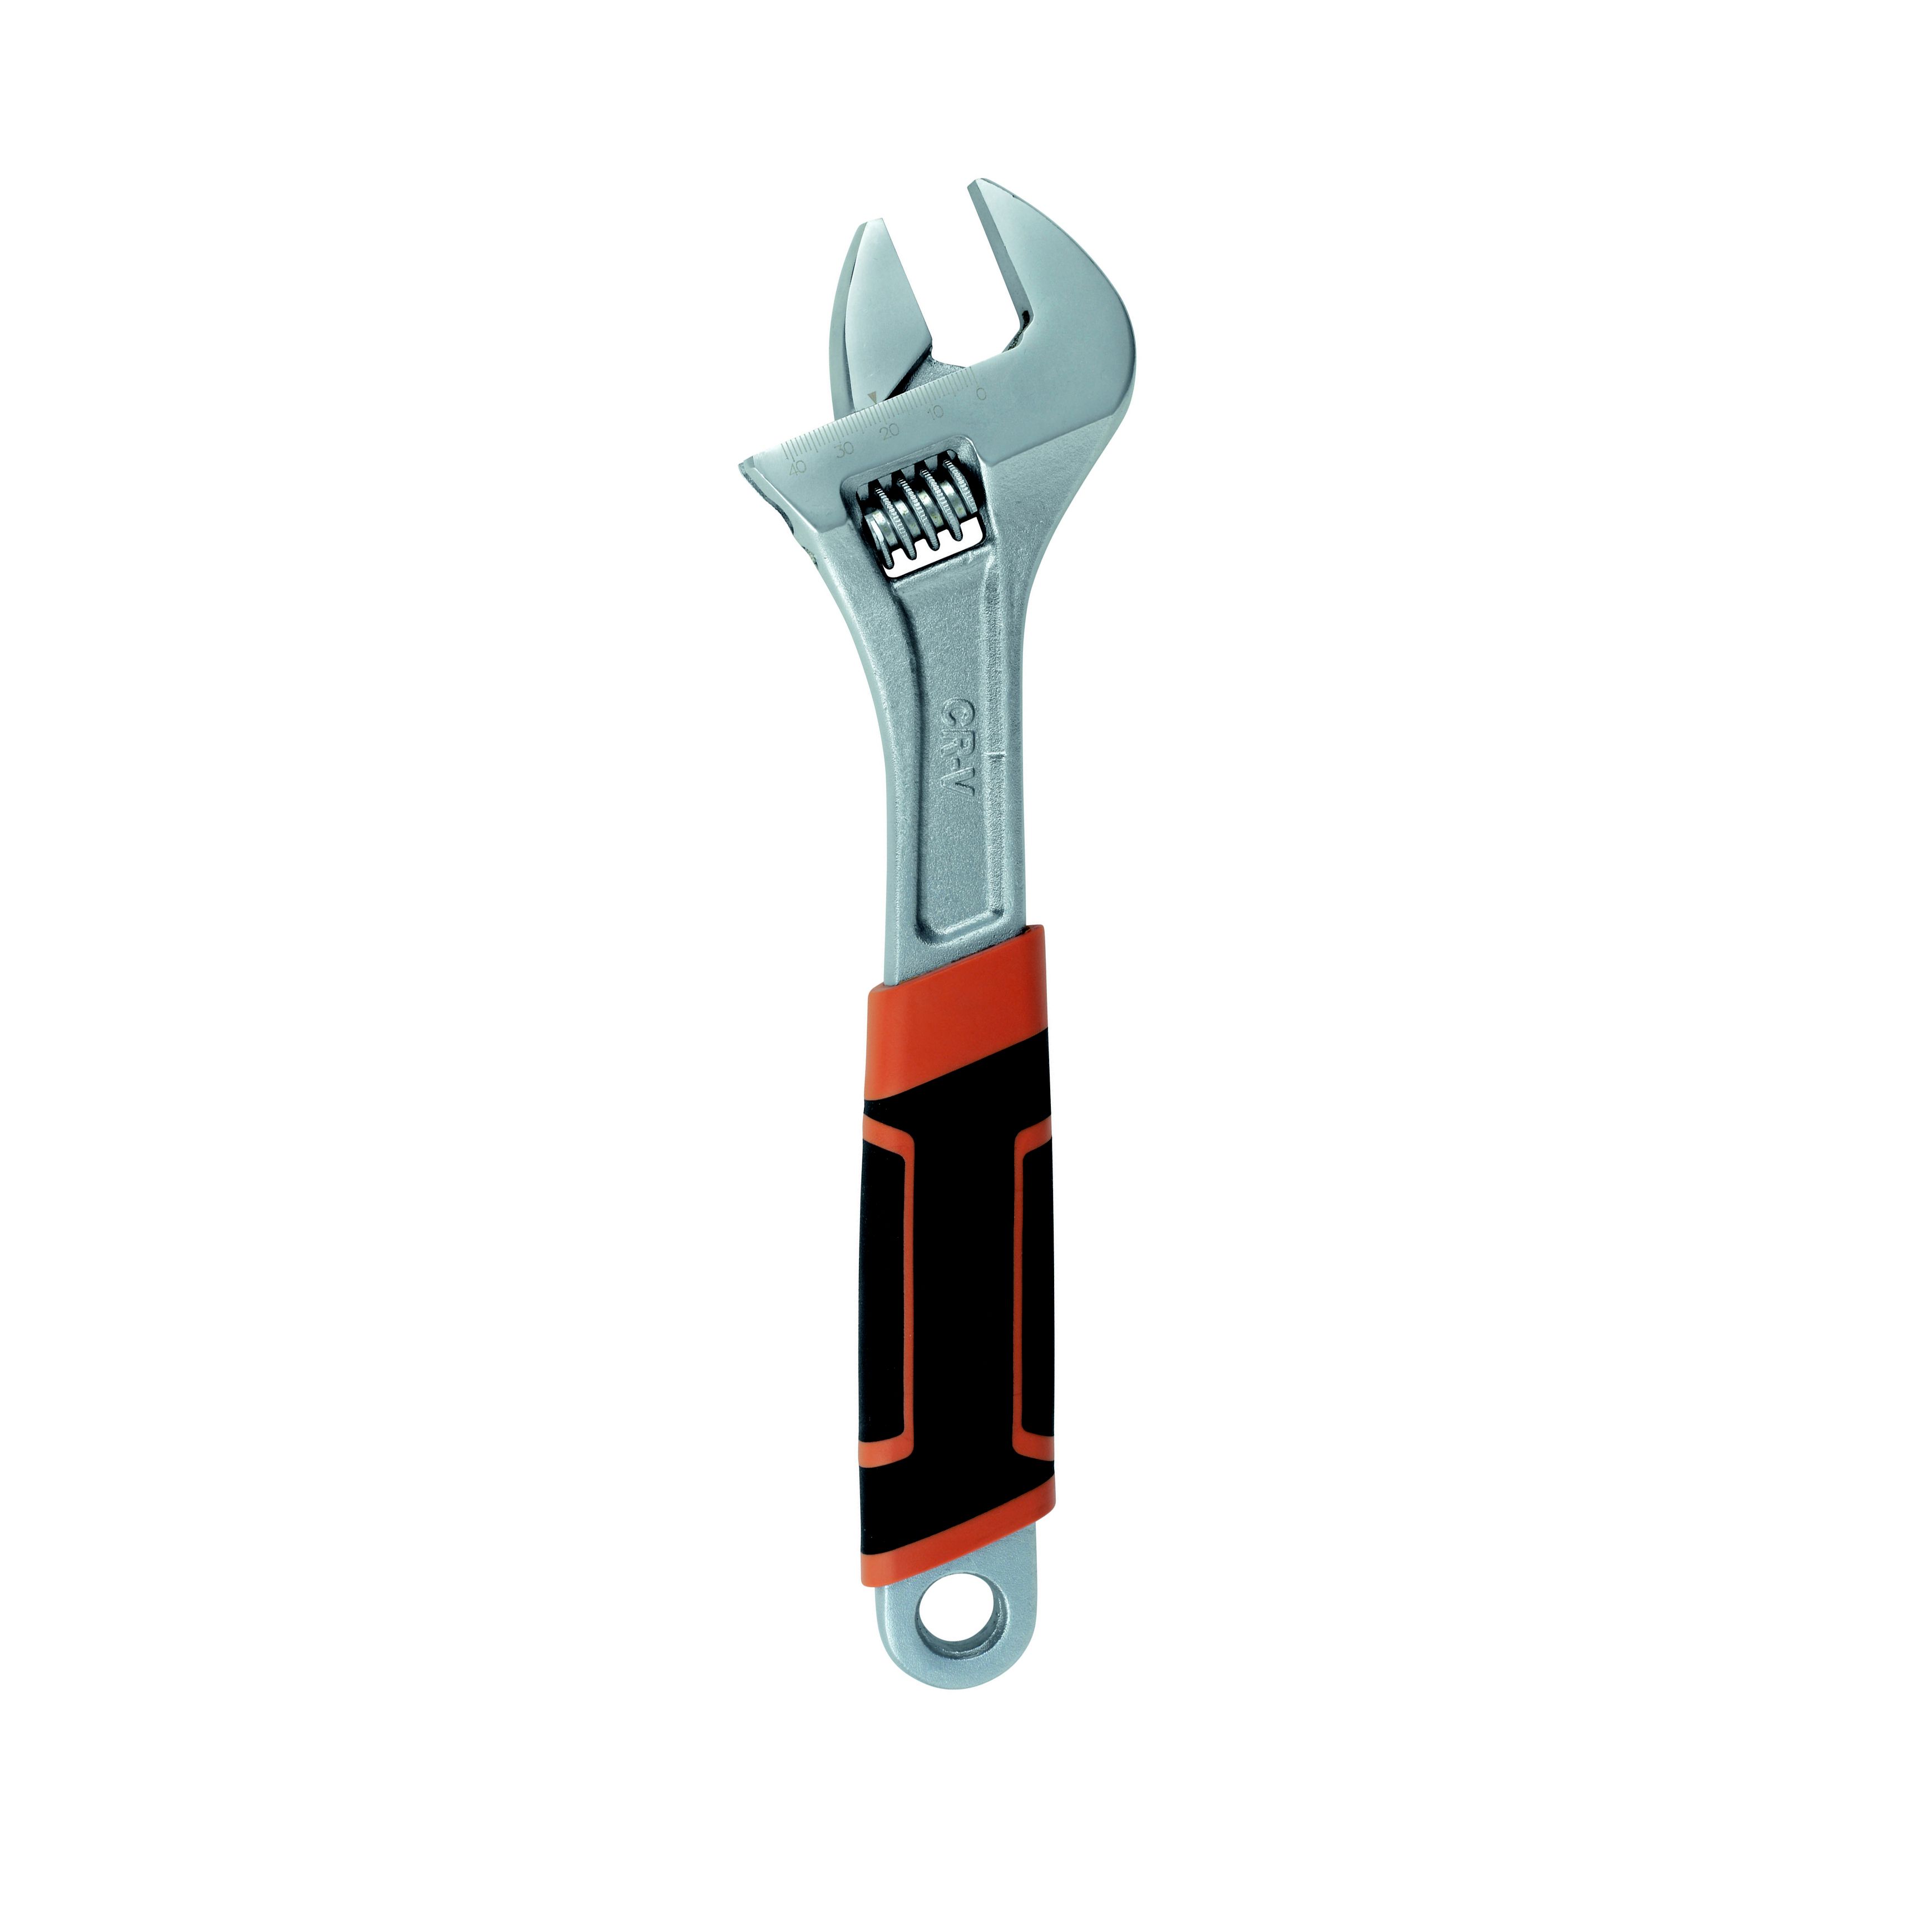 Magnusson 304.8mm Adjustable wrench